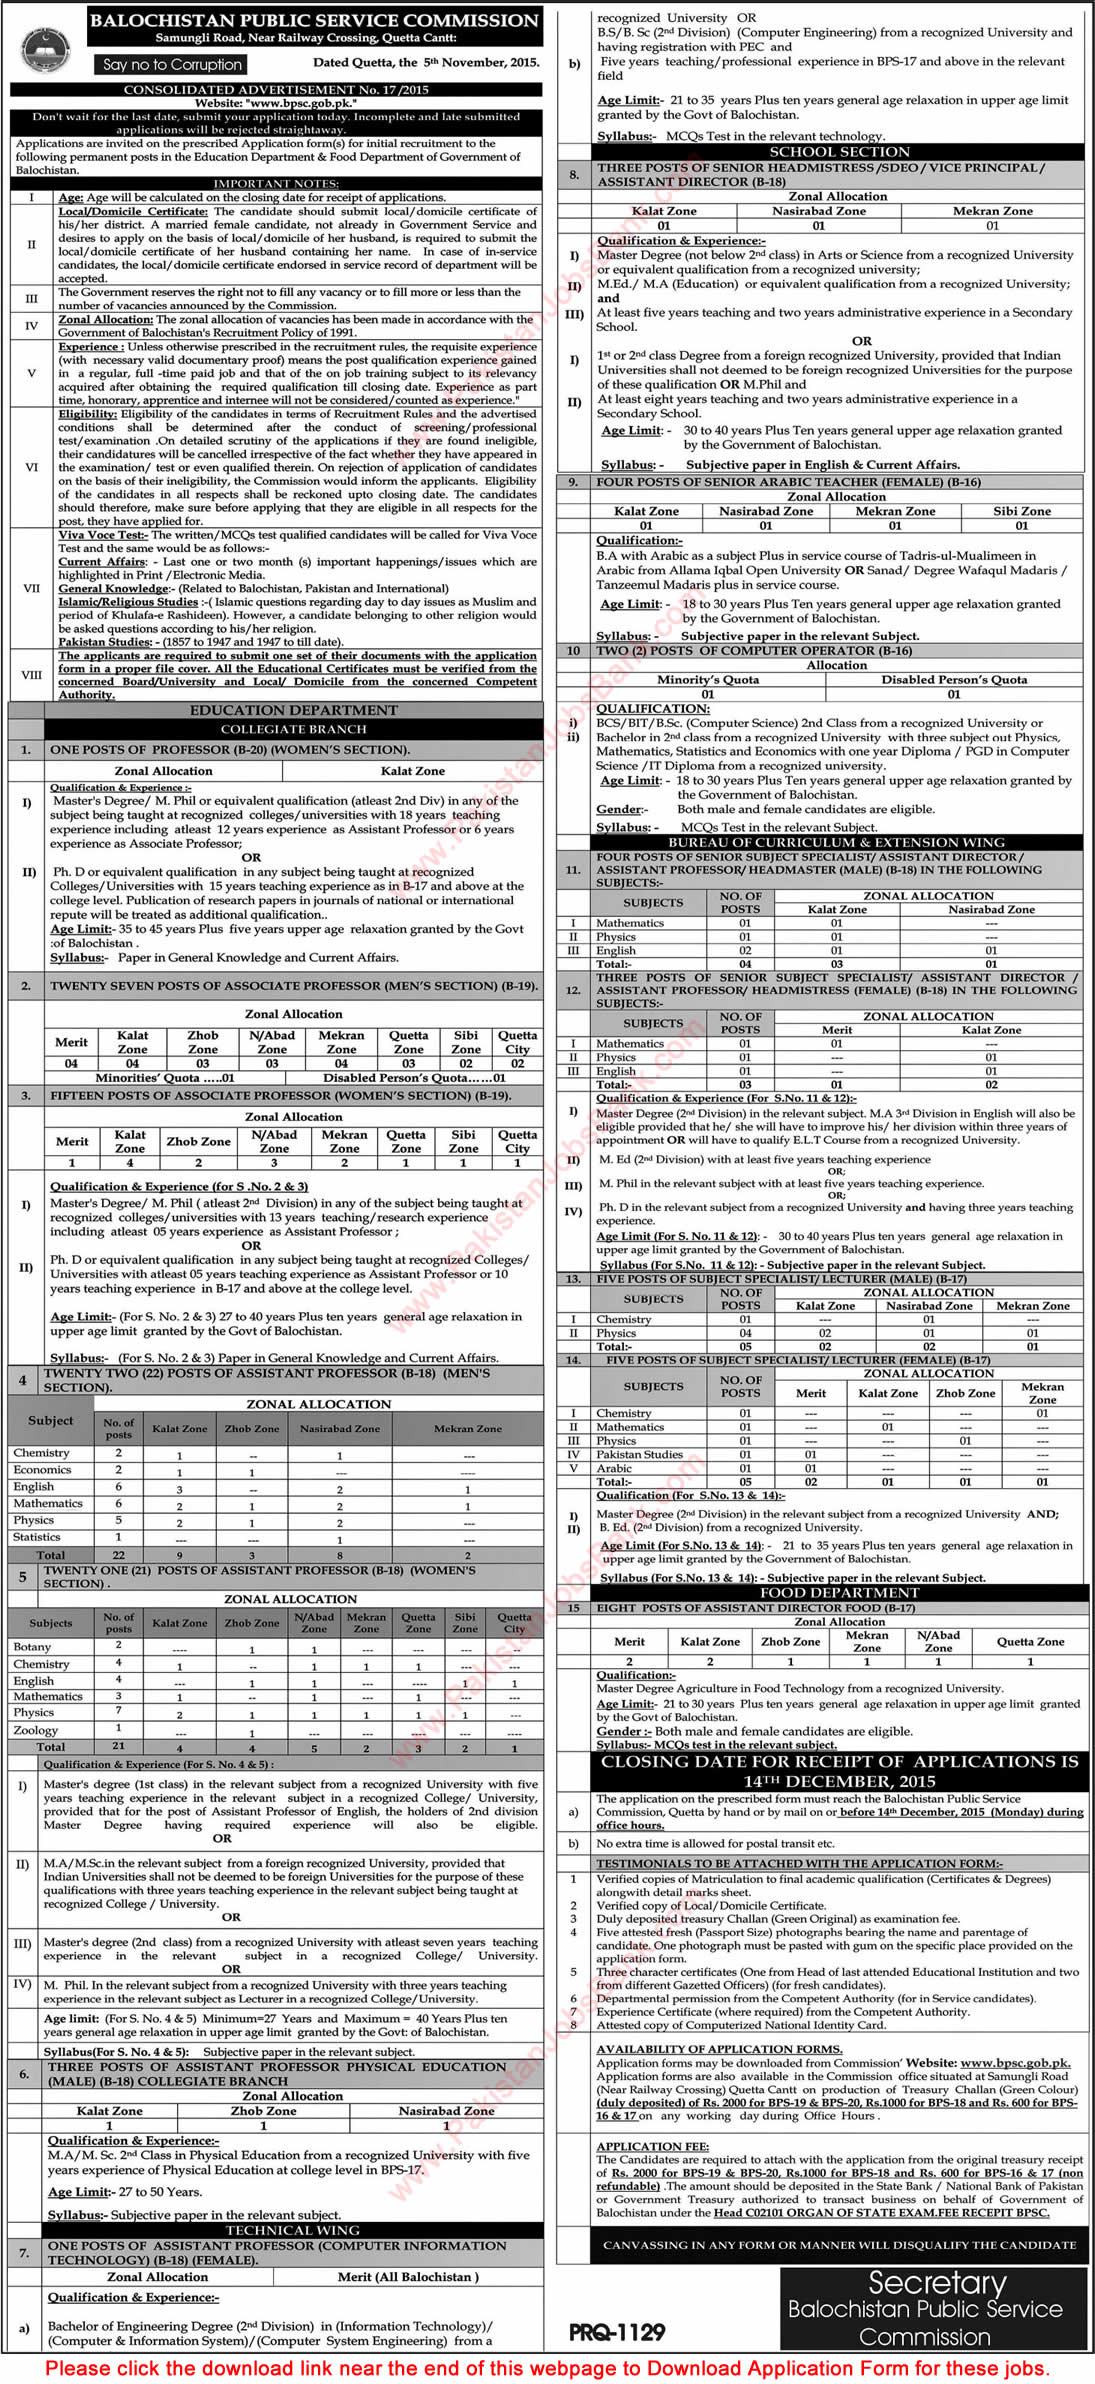 Balochistan Public Service Commission Jobs 2015 November BPSC Application Form Download